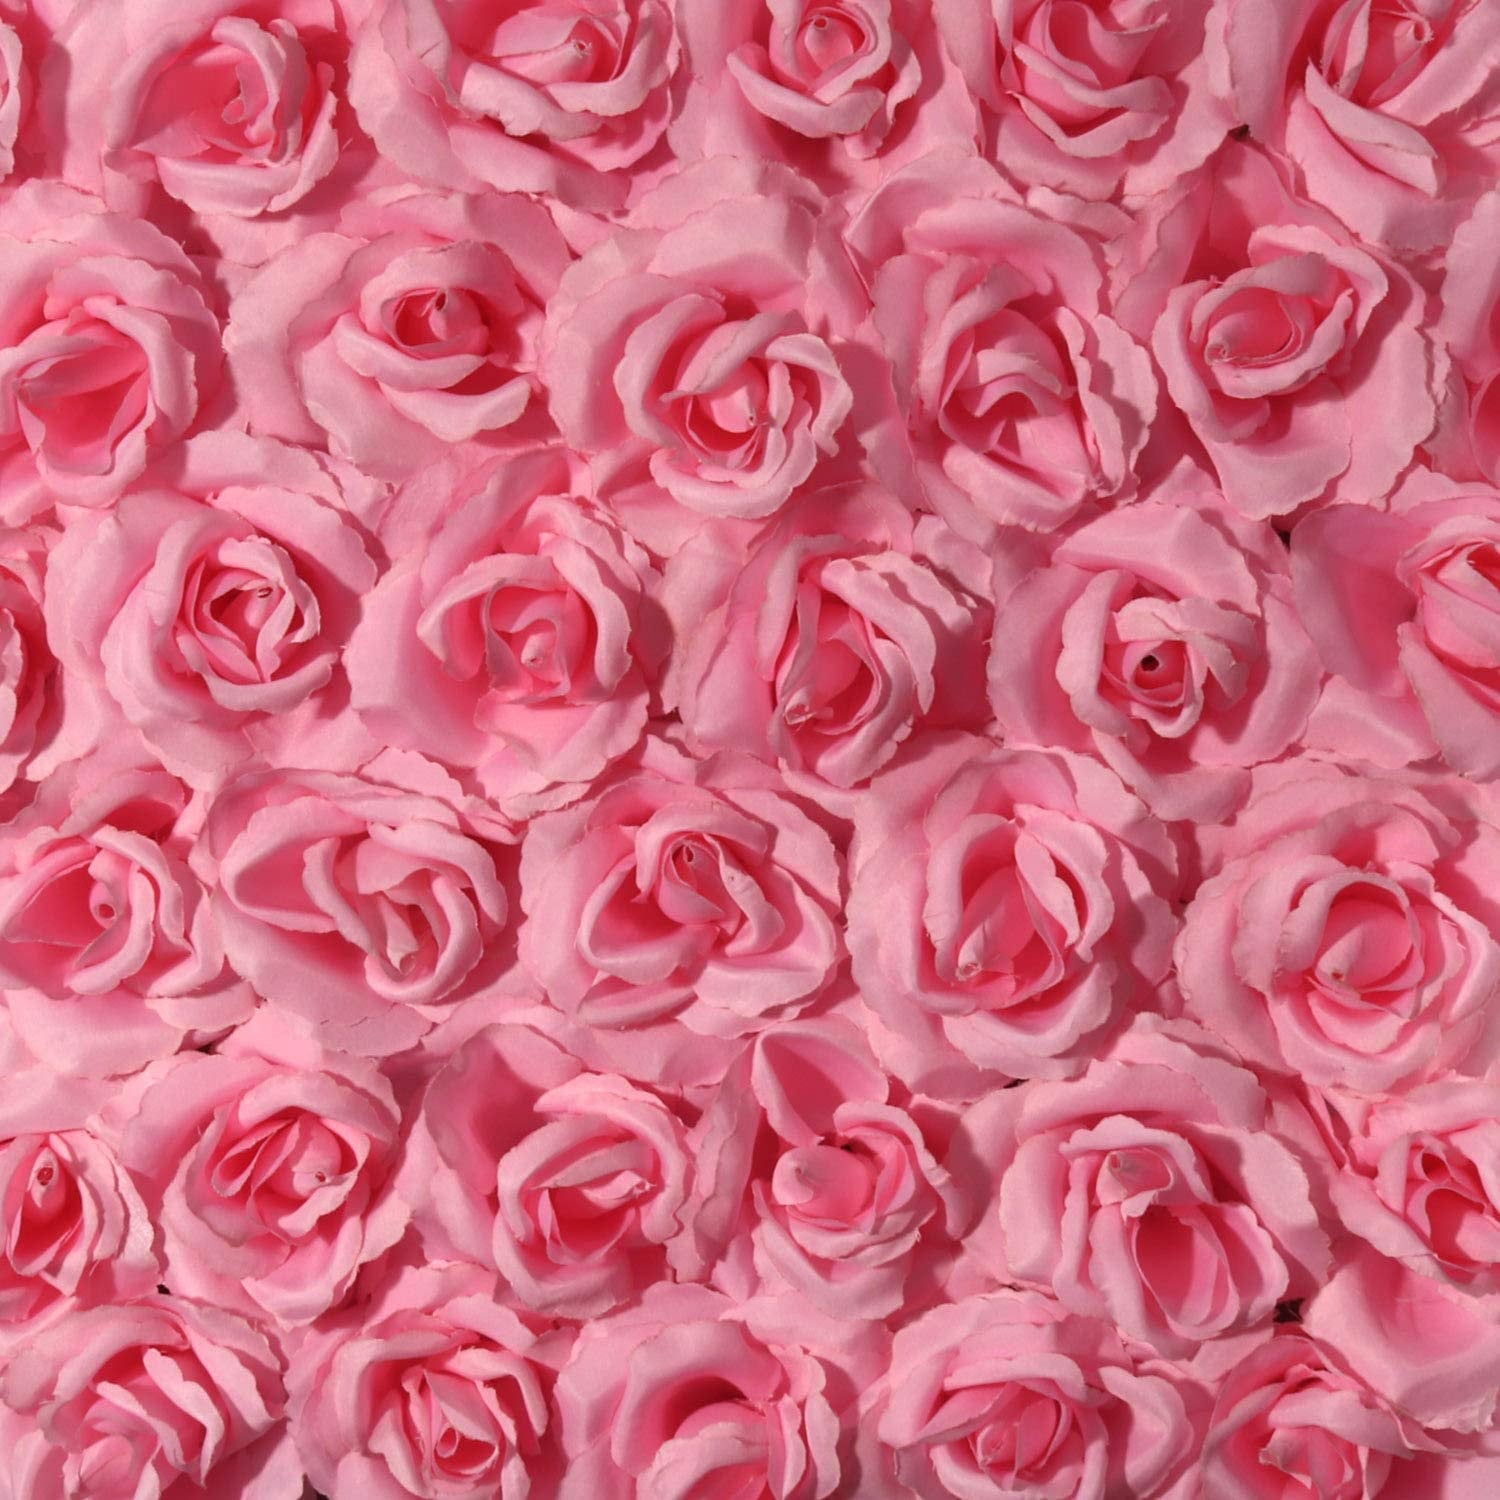 Blush Pink Rose Flower Picks, 8-Inch, 3 Wide